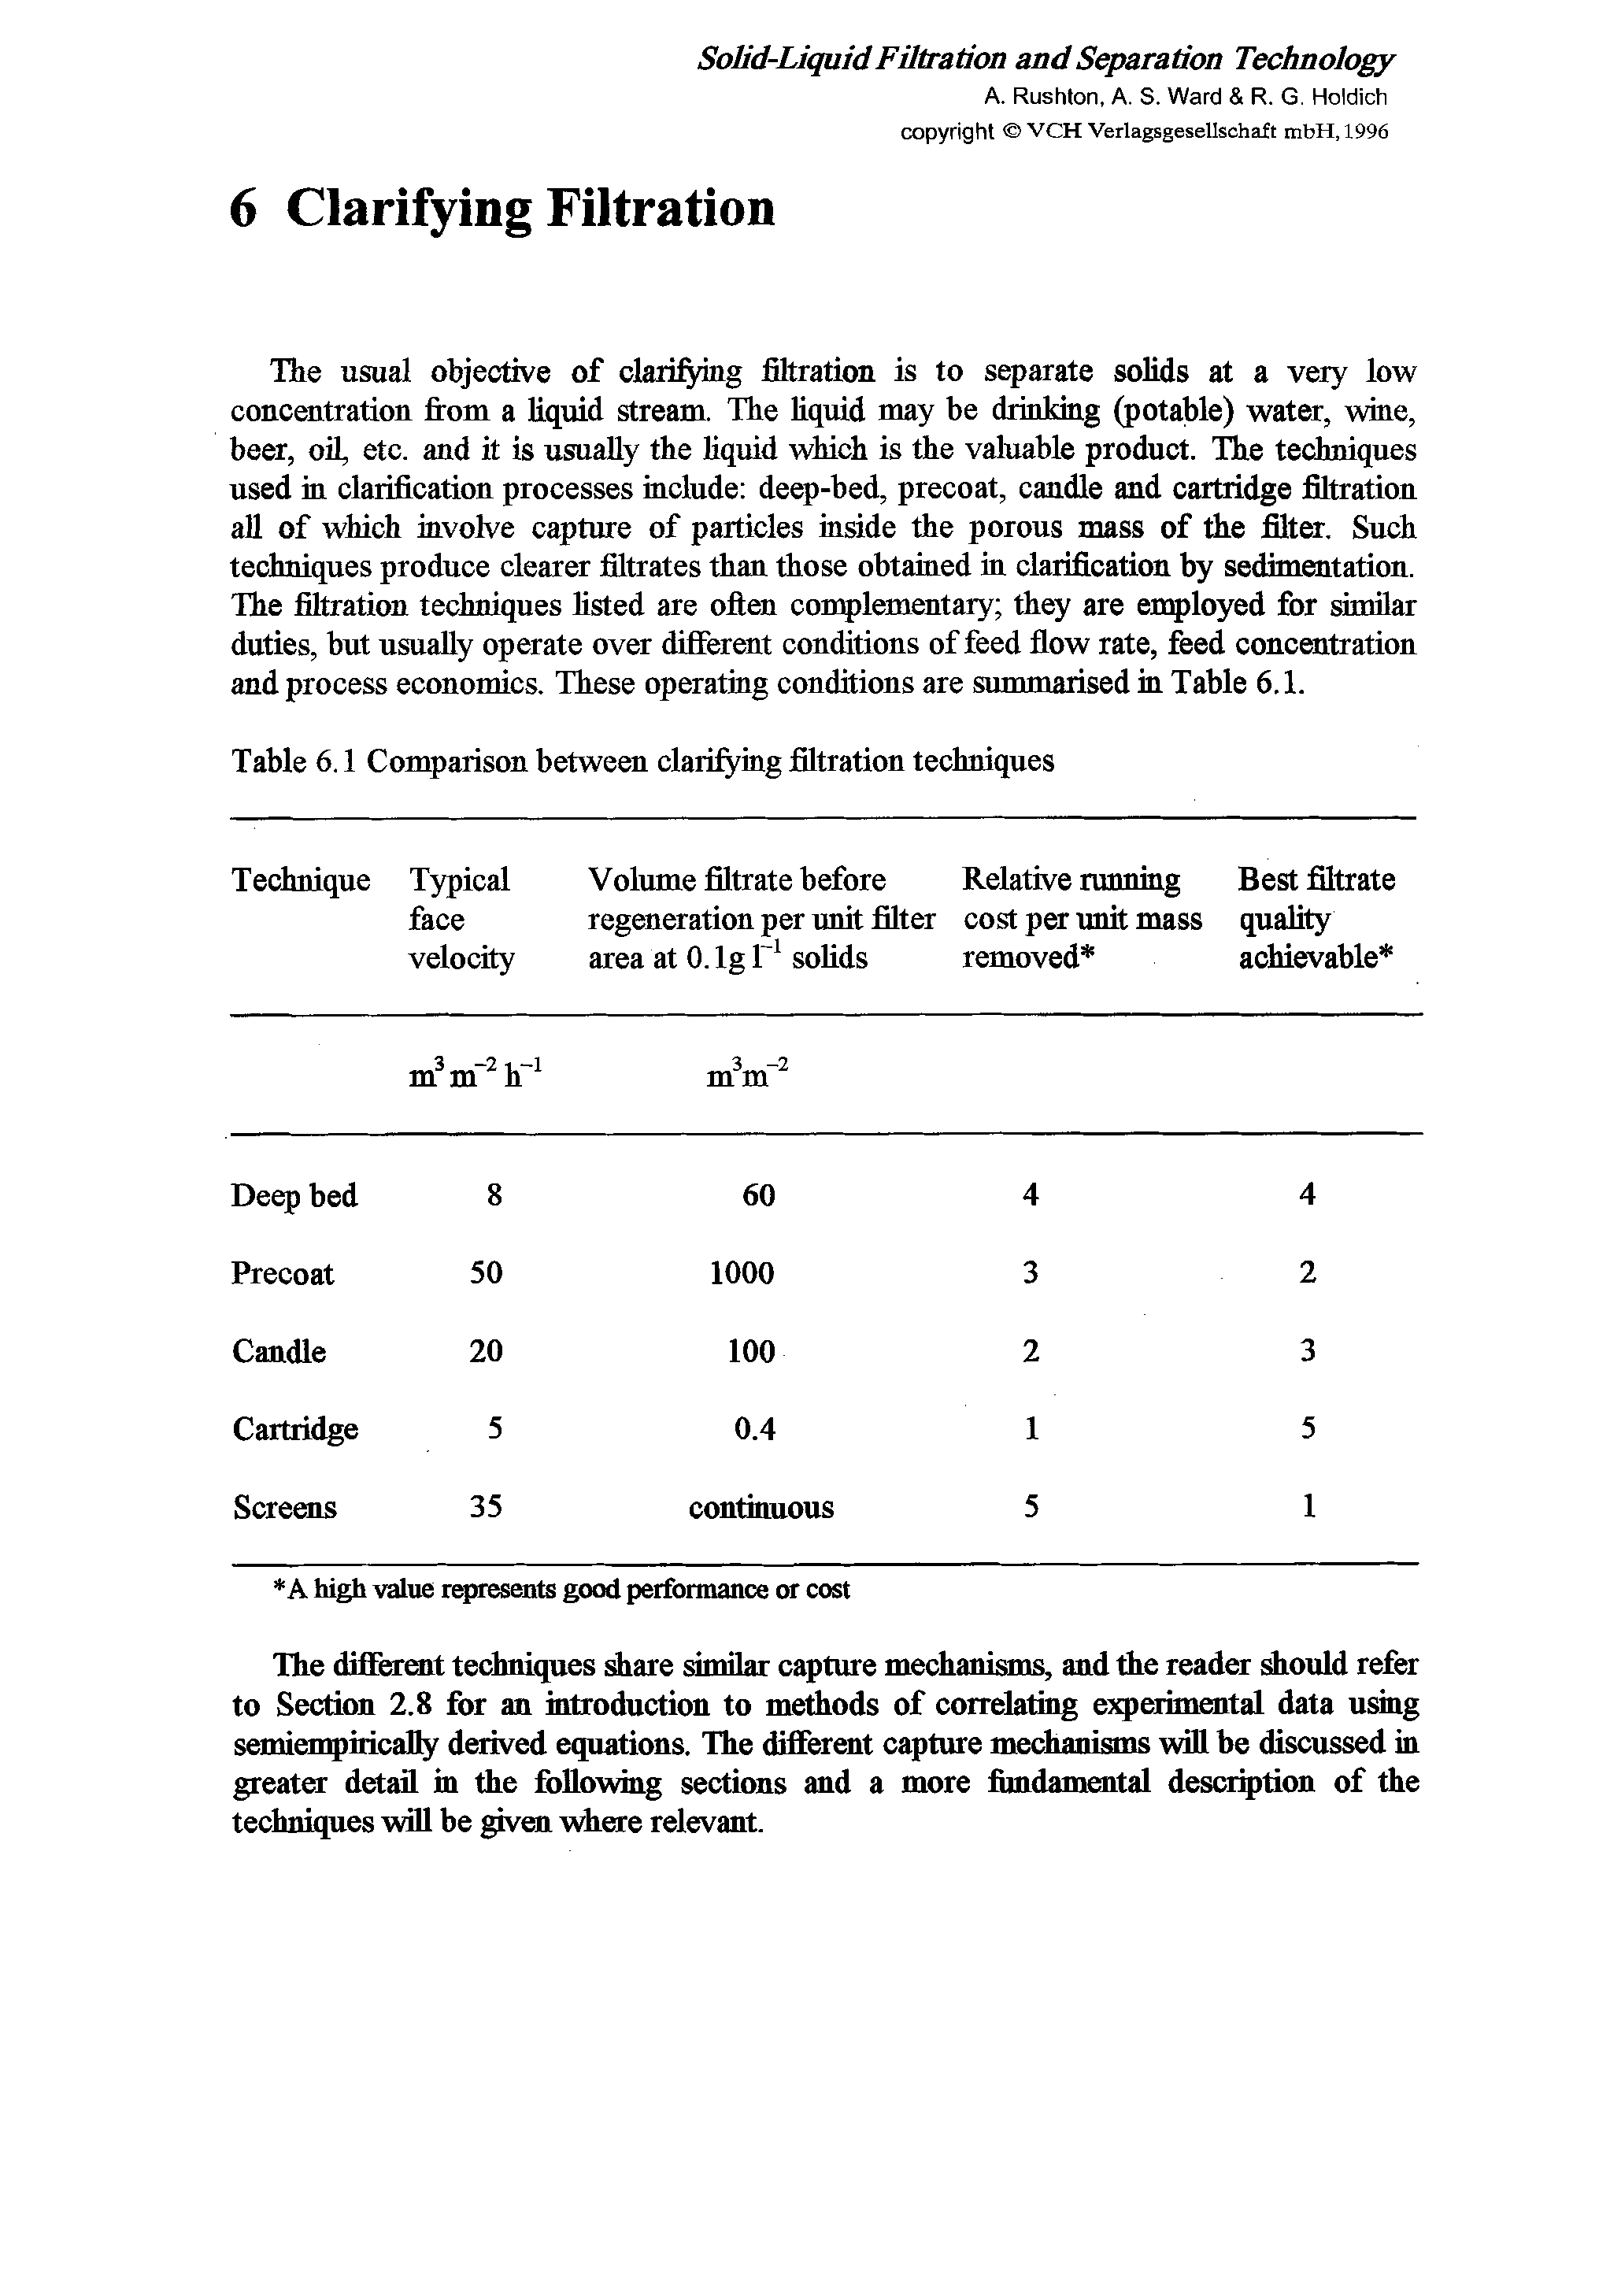 Table 6.1 Comparison between clarifying filtration techniques...